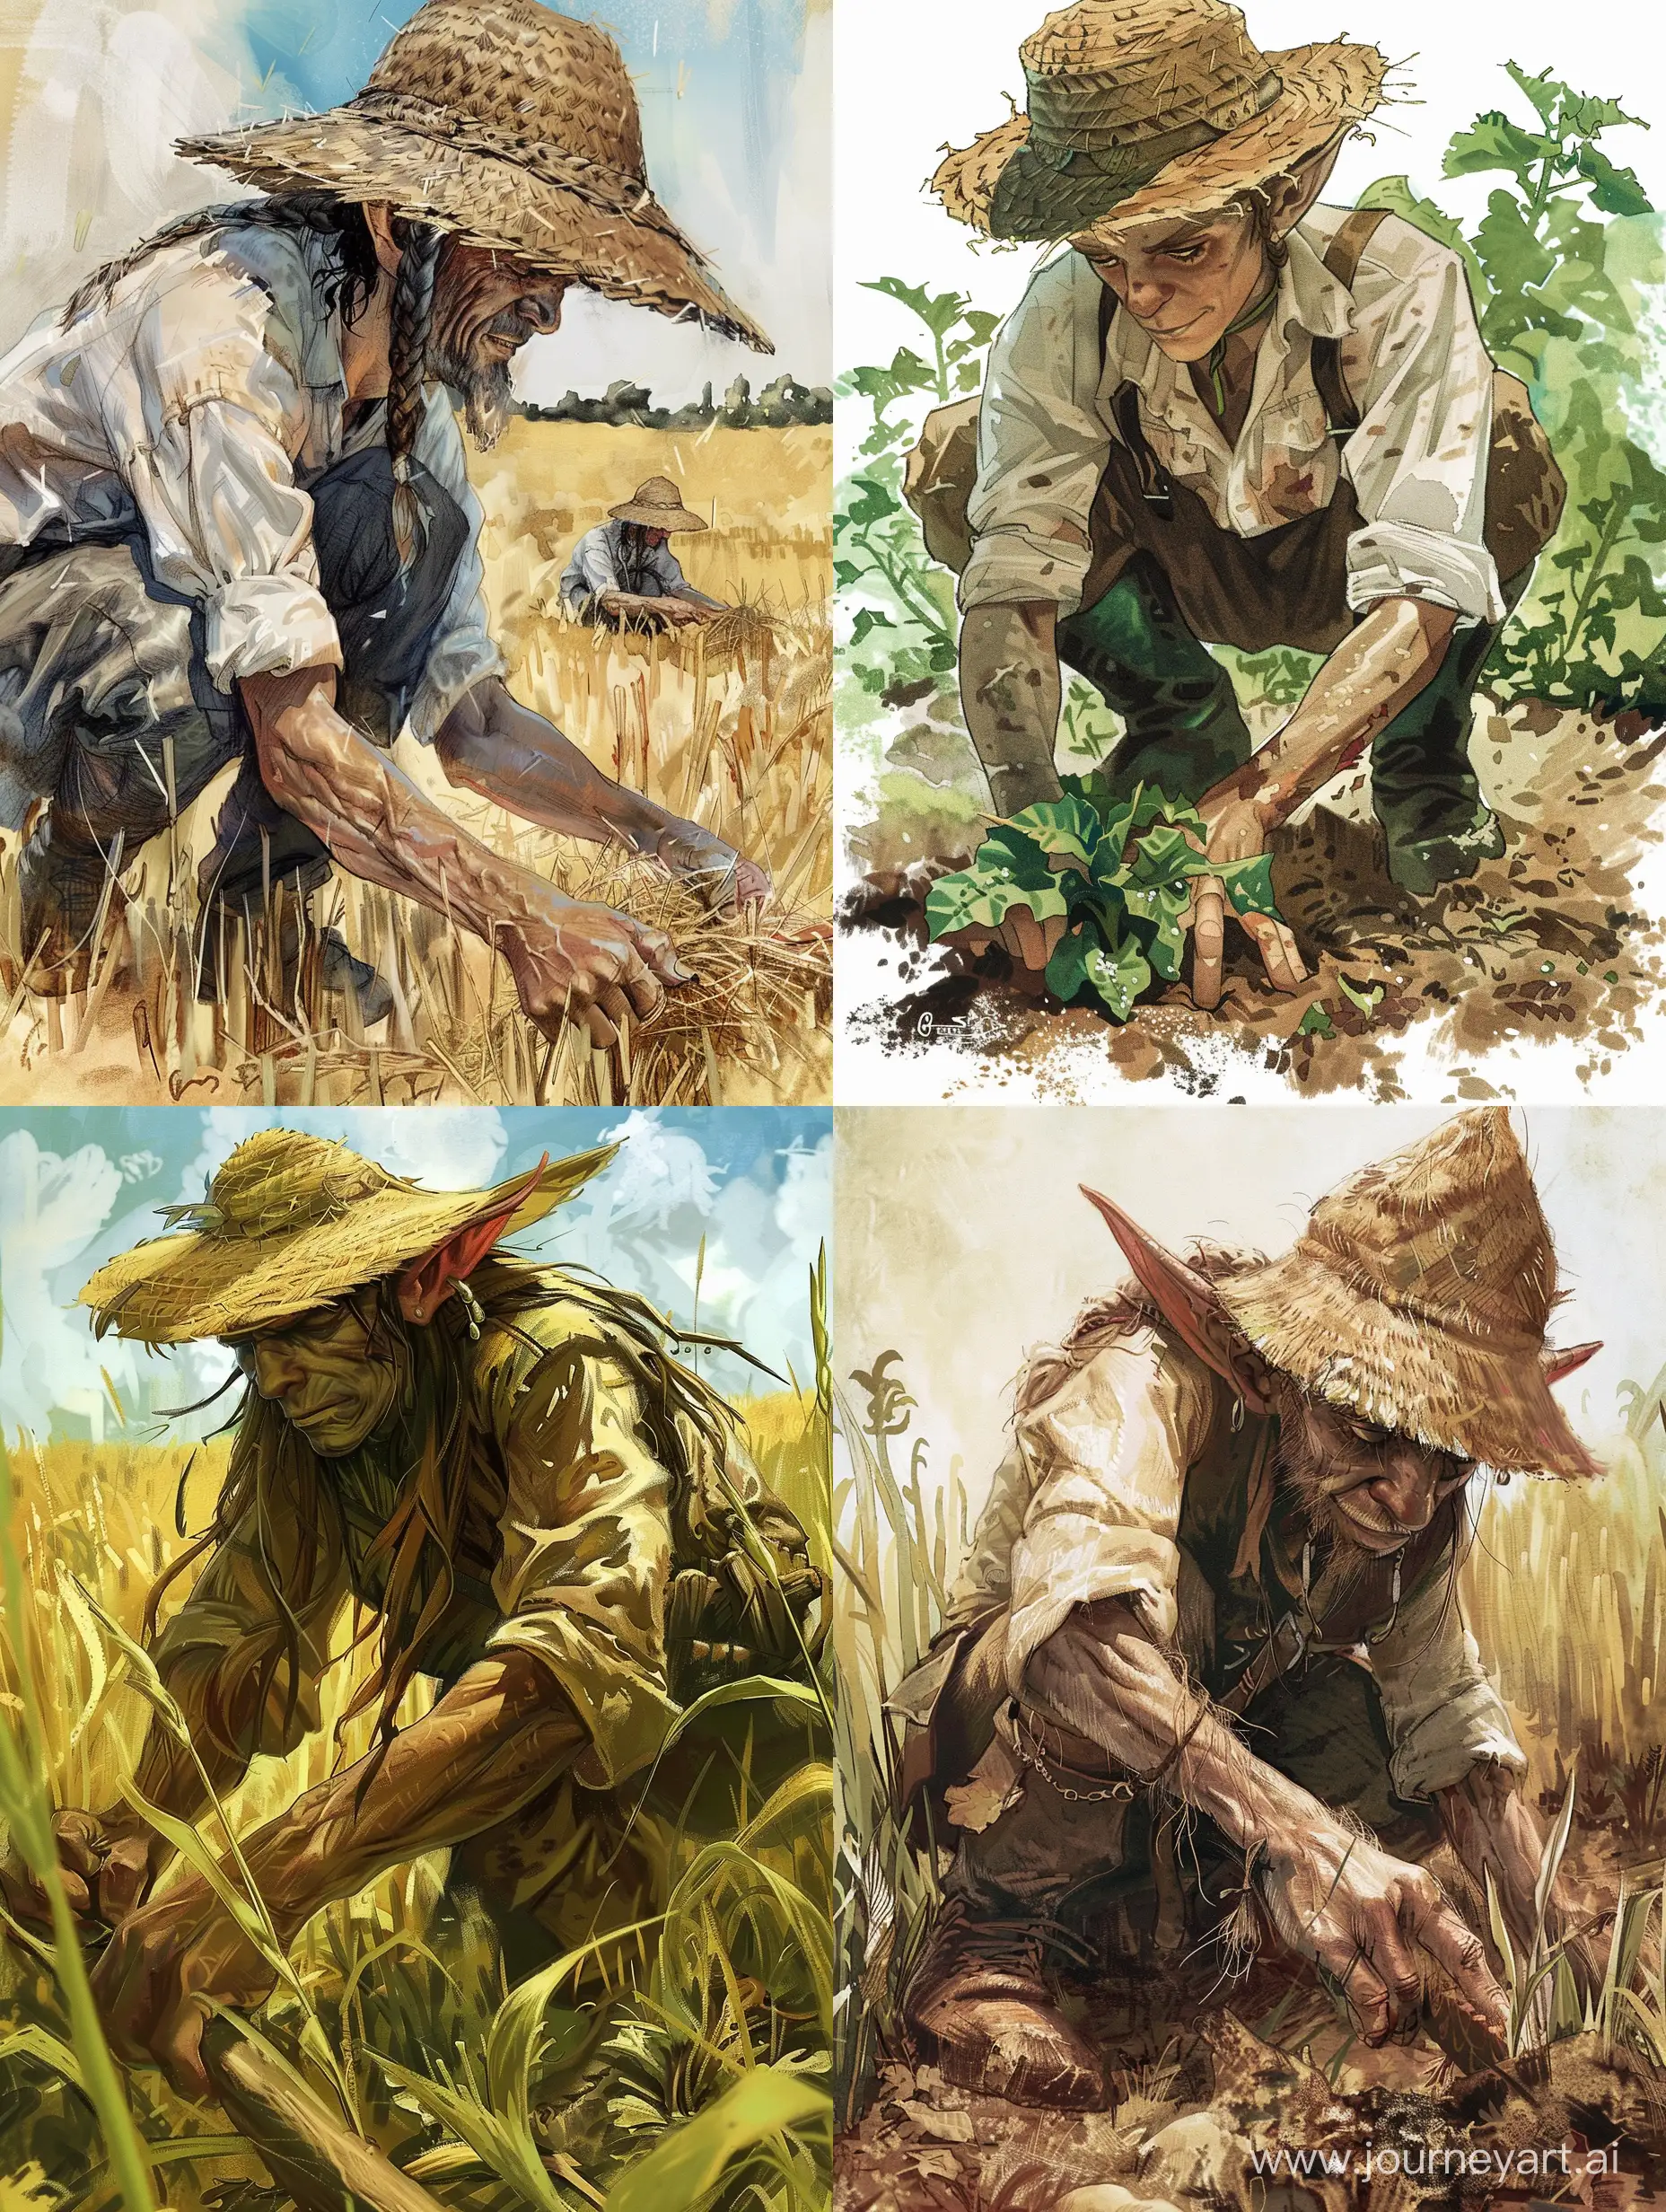 Rustic-Elf-Farmer-Cultivating-Crops-in-a-Straw-Hat